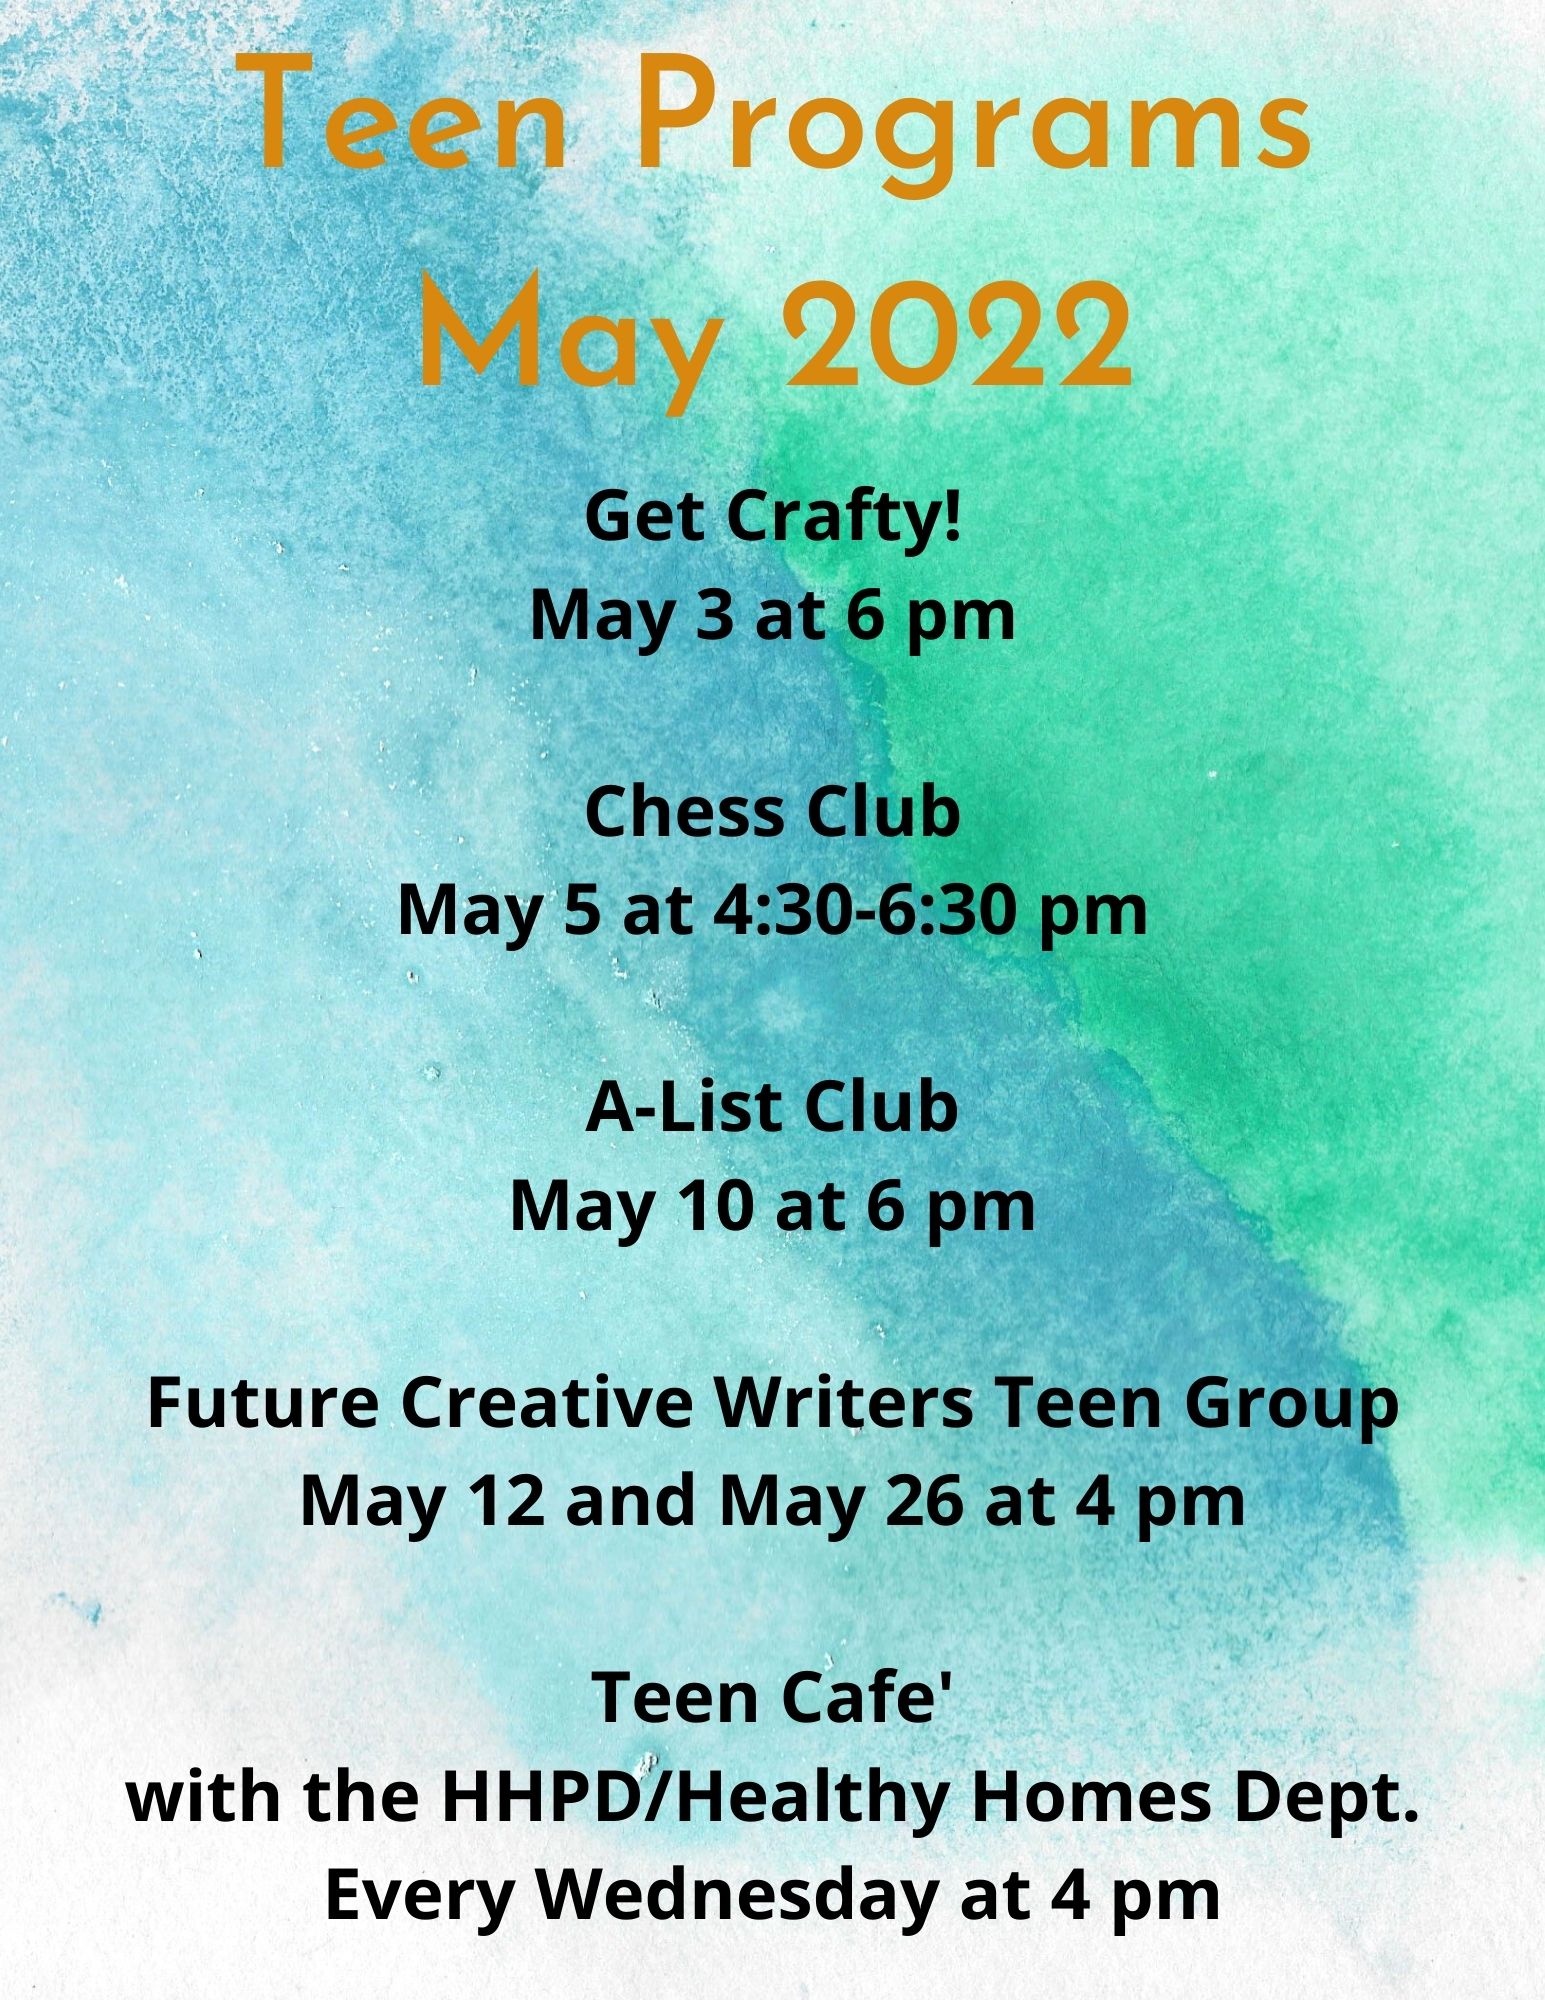 Teen Programs May 2022